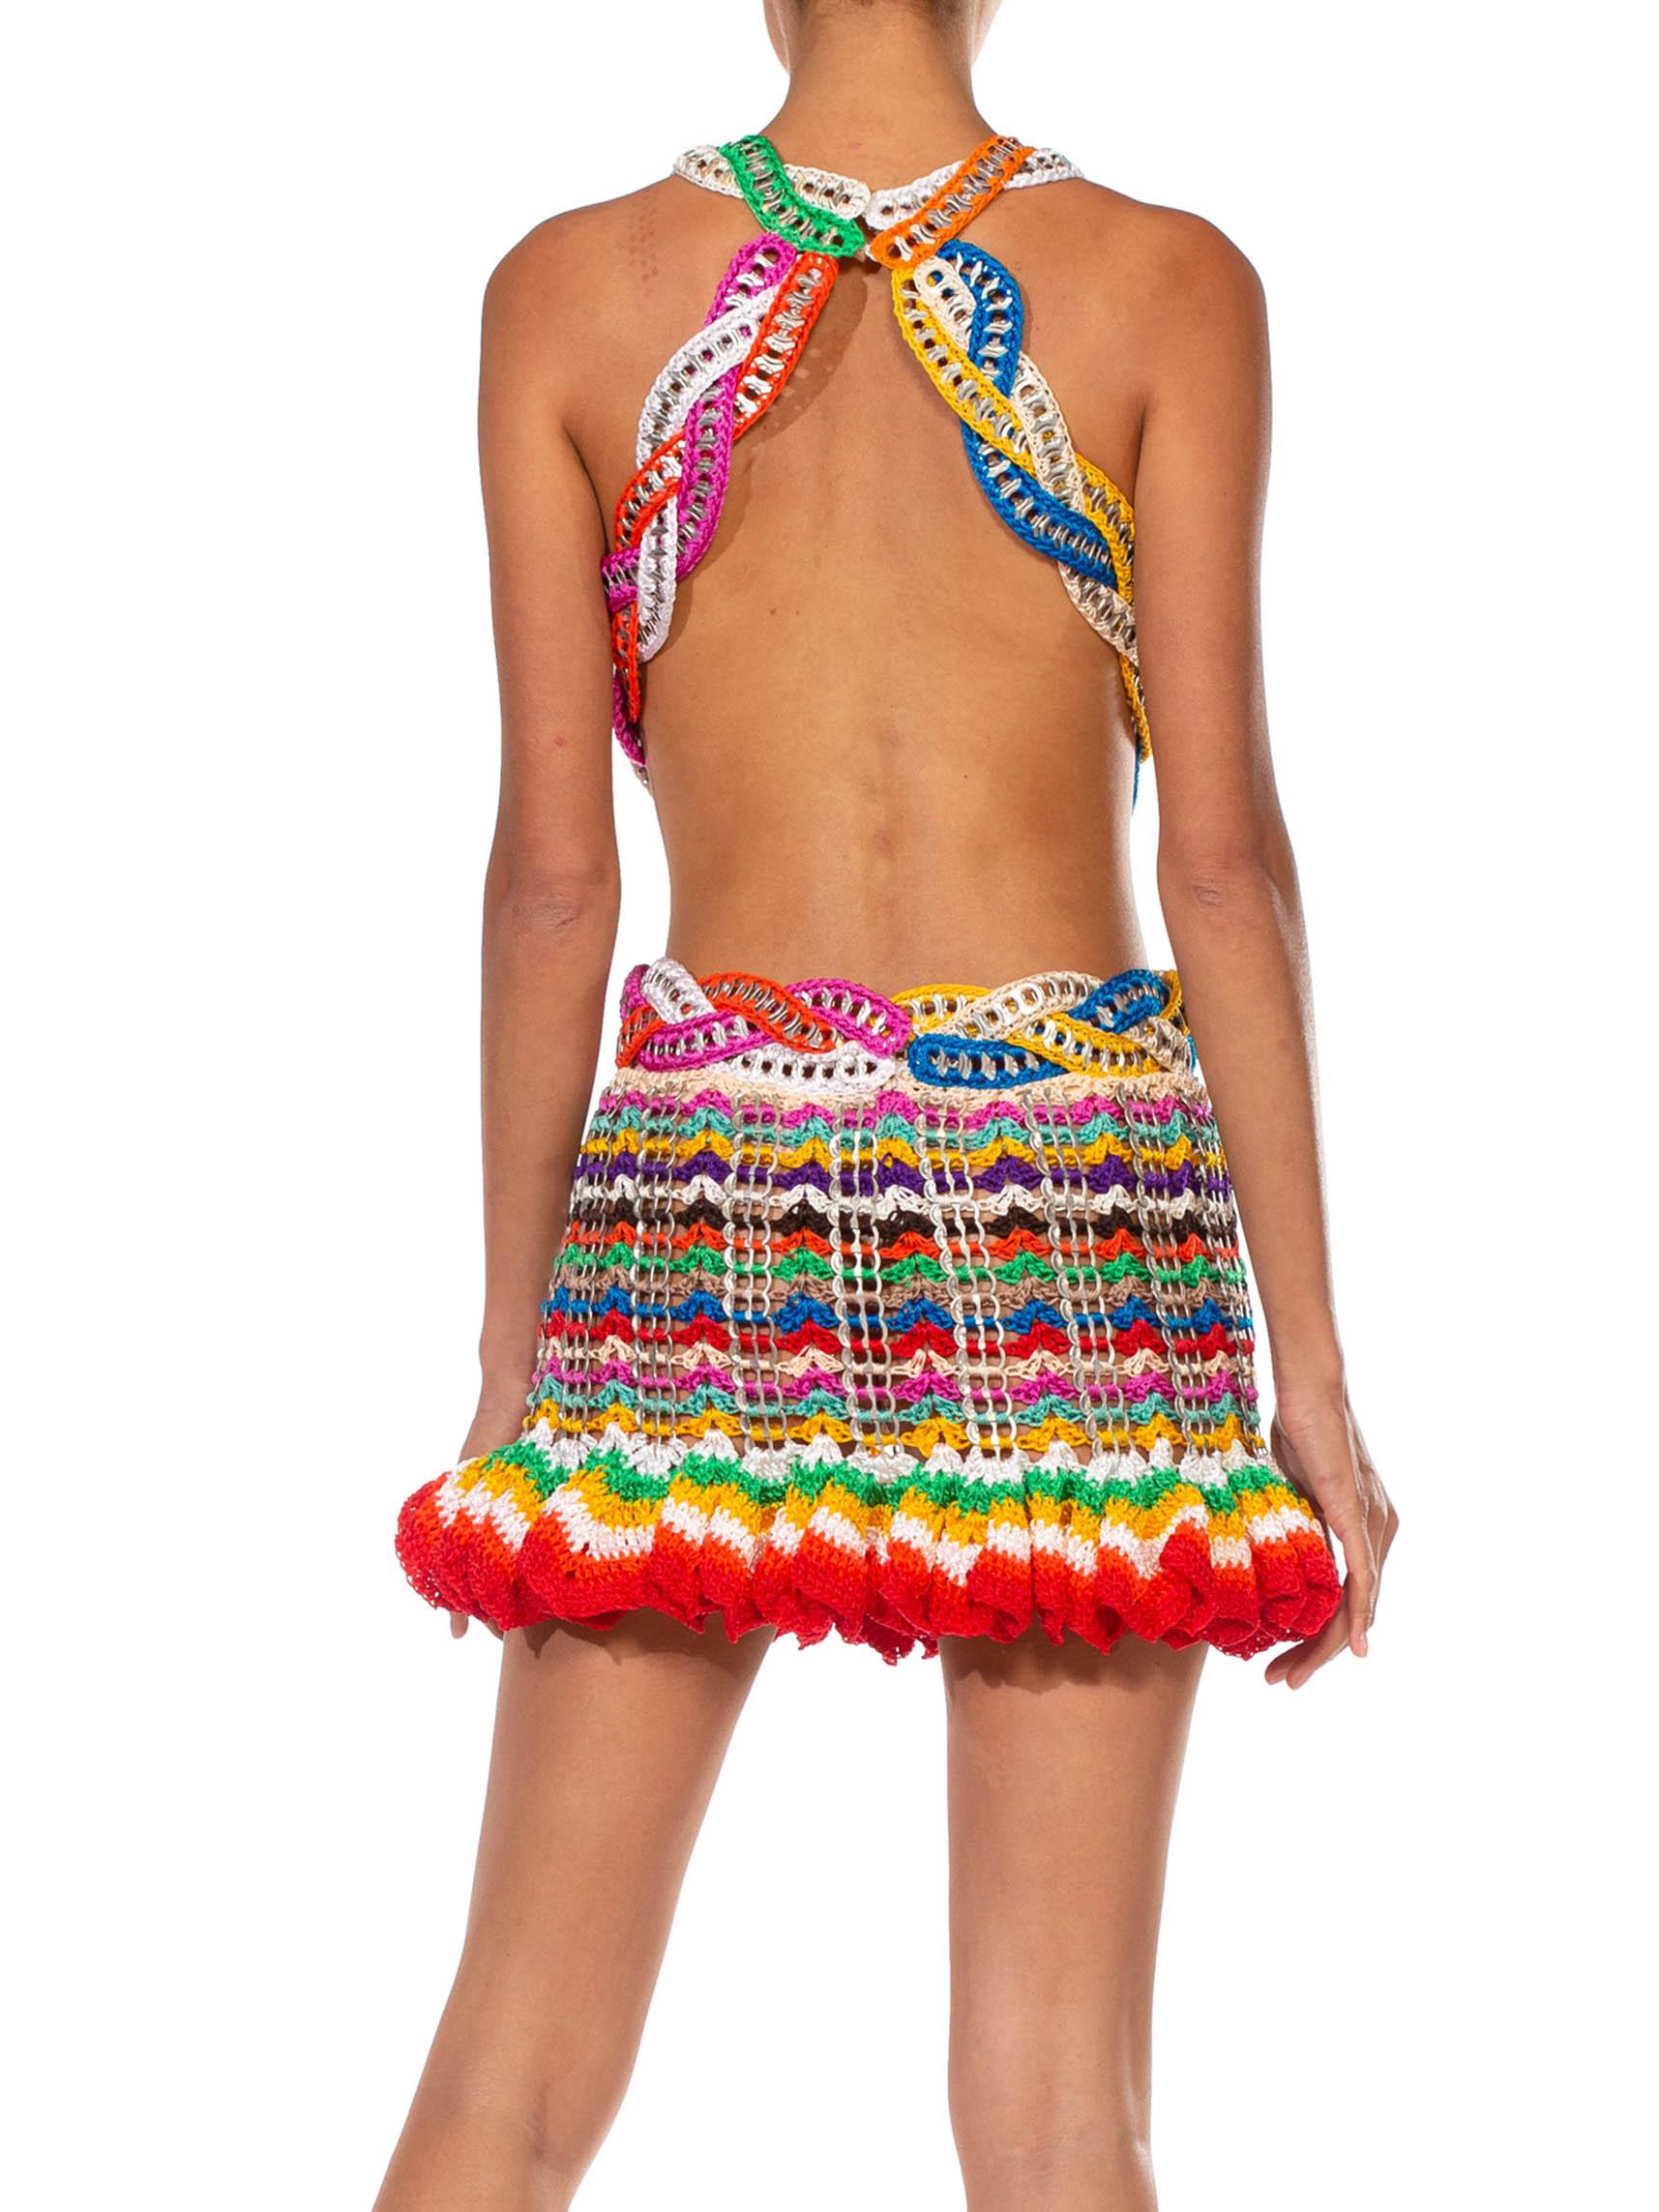 MORPHEW COLLECTION Rainbow Nylon &Metal Handmade Crocheted Dress For Sale 4